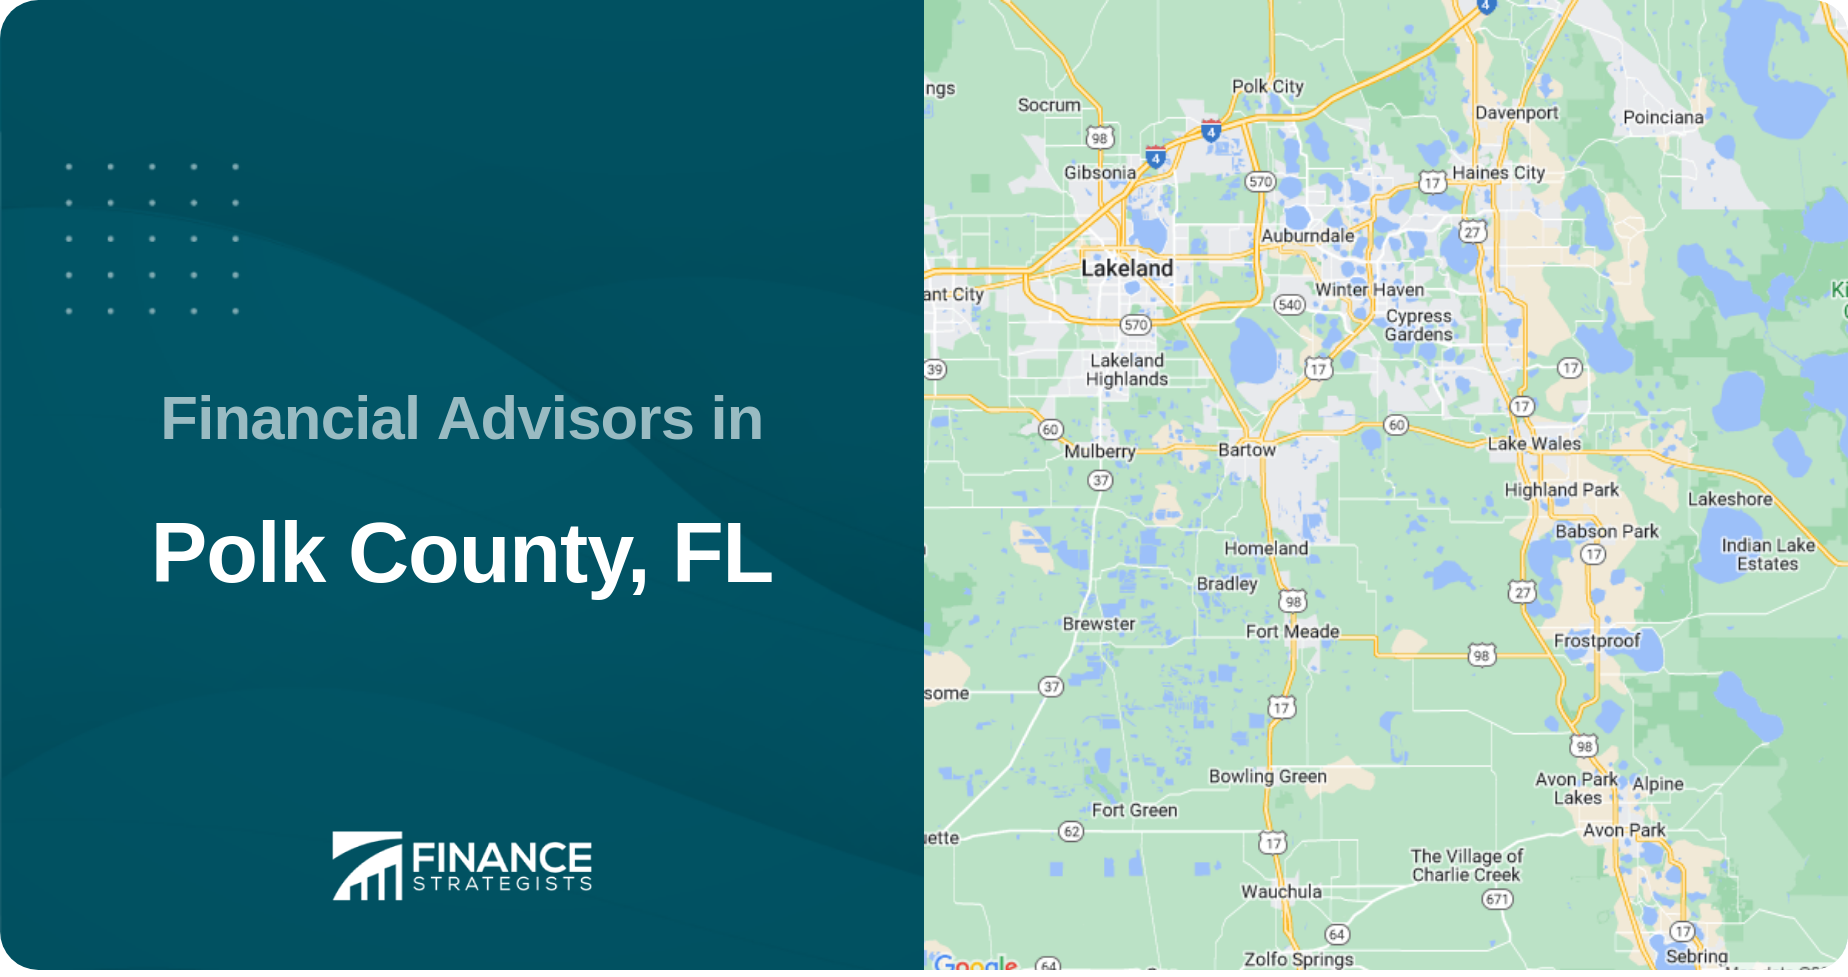 Financial Advisors in Polk County, FL